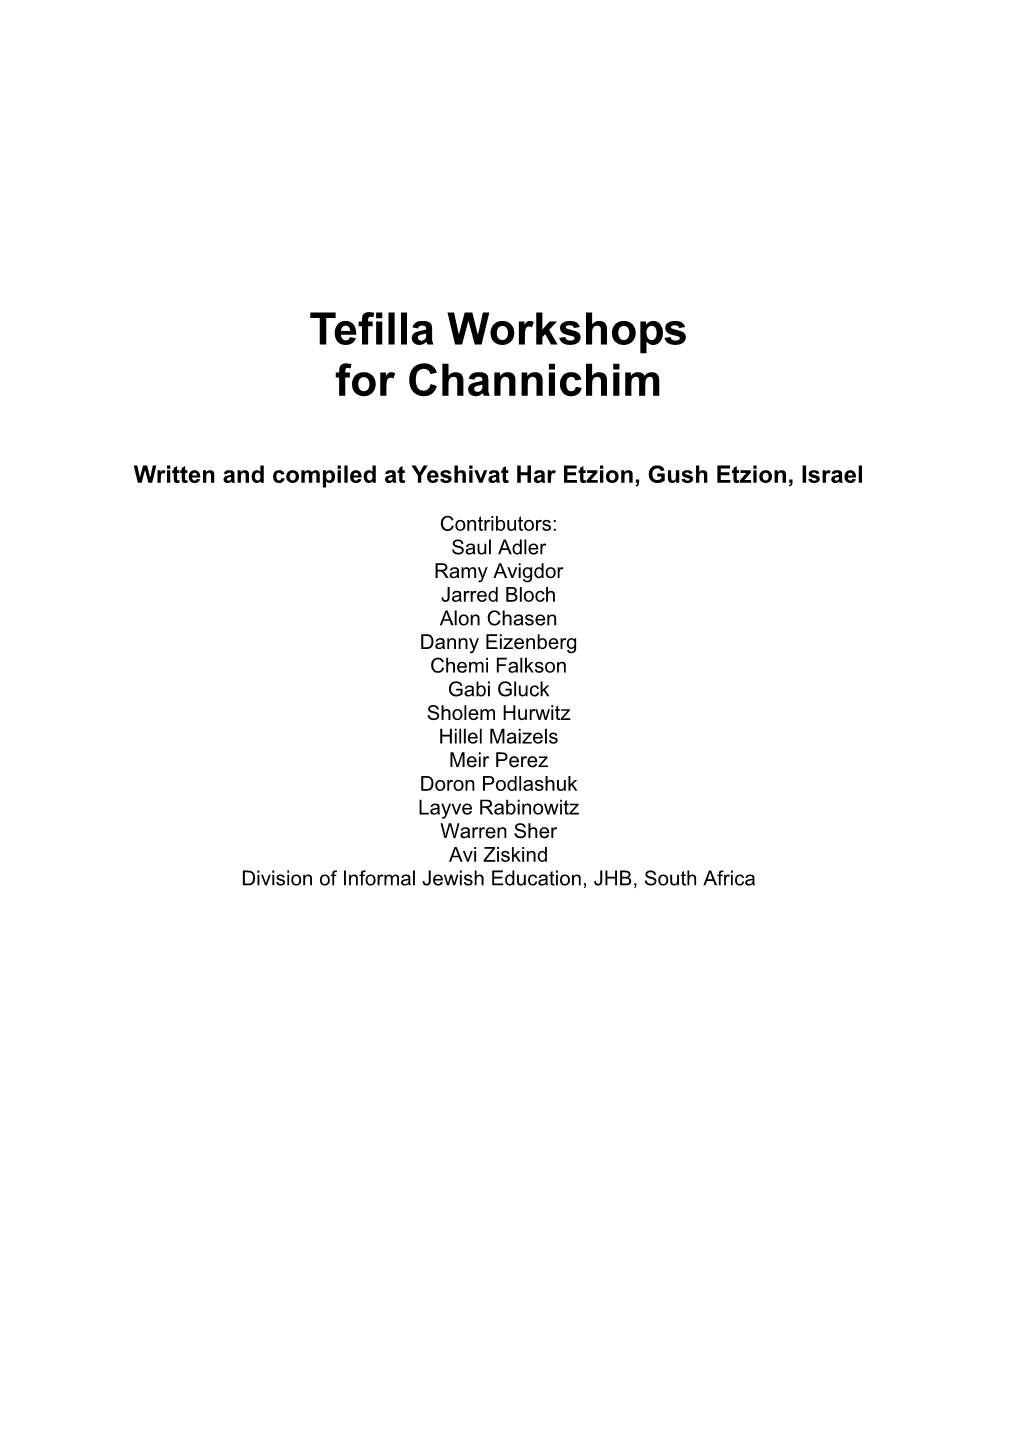 Tefilla Workshops for Channichim by Saul Adler Et Al